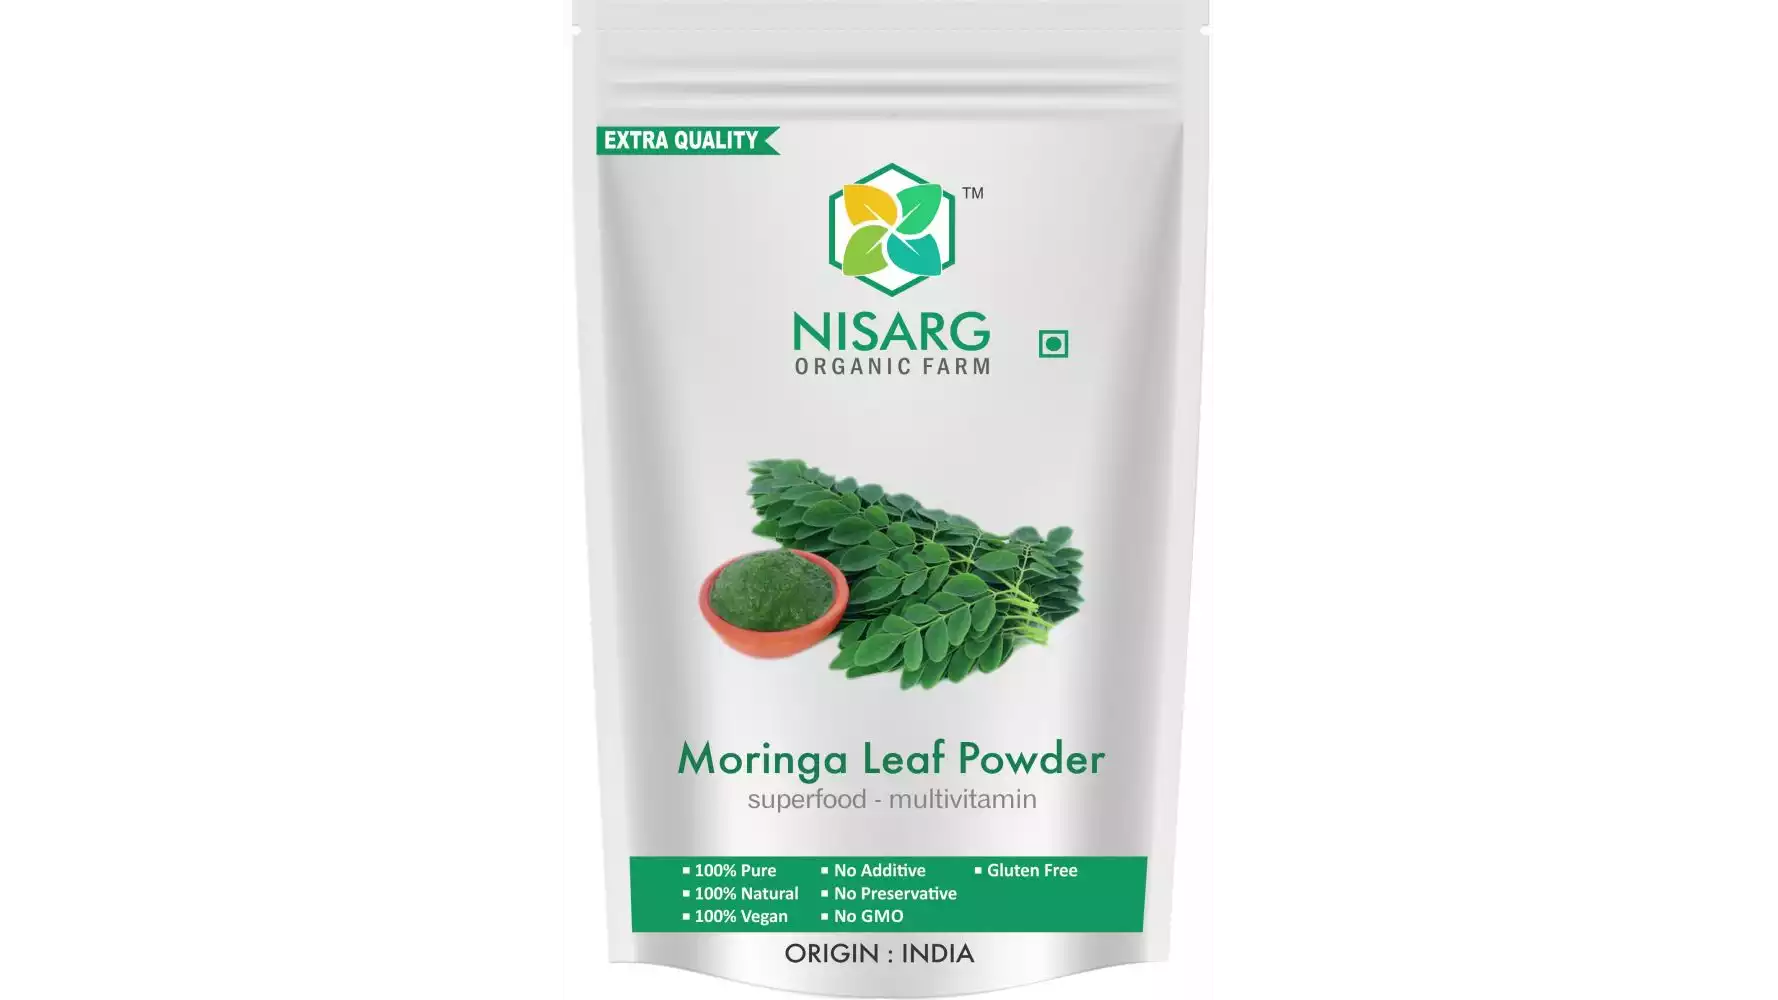 Nisarg Organic Farm Moringa Leaf Powder (100g)